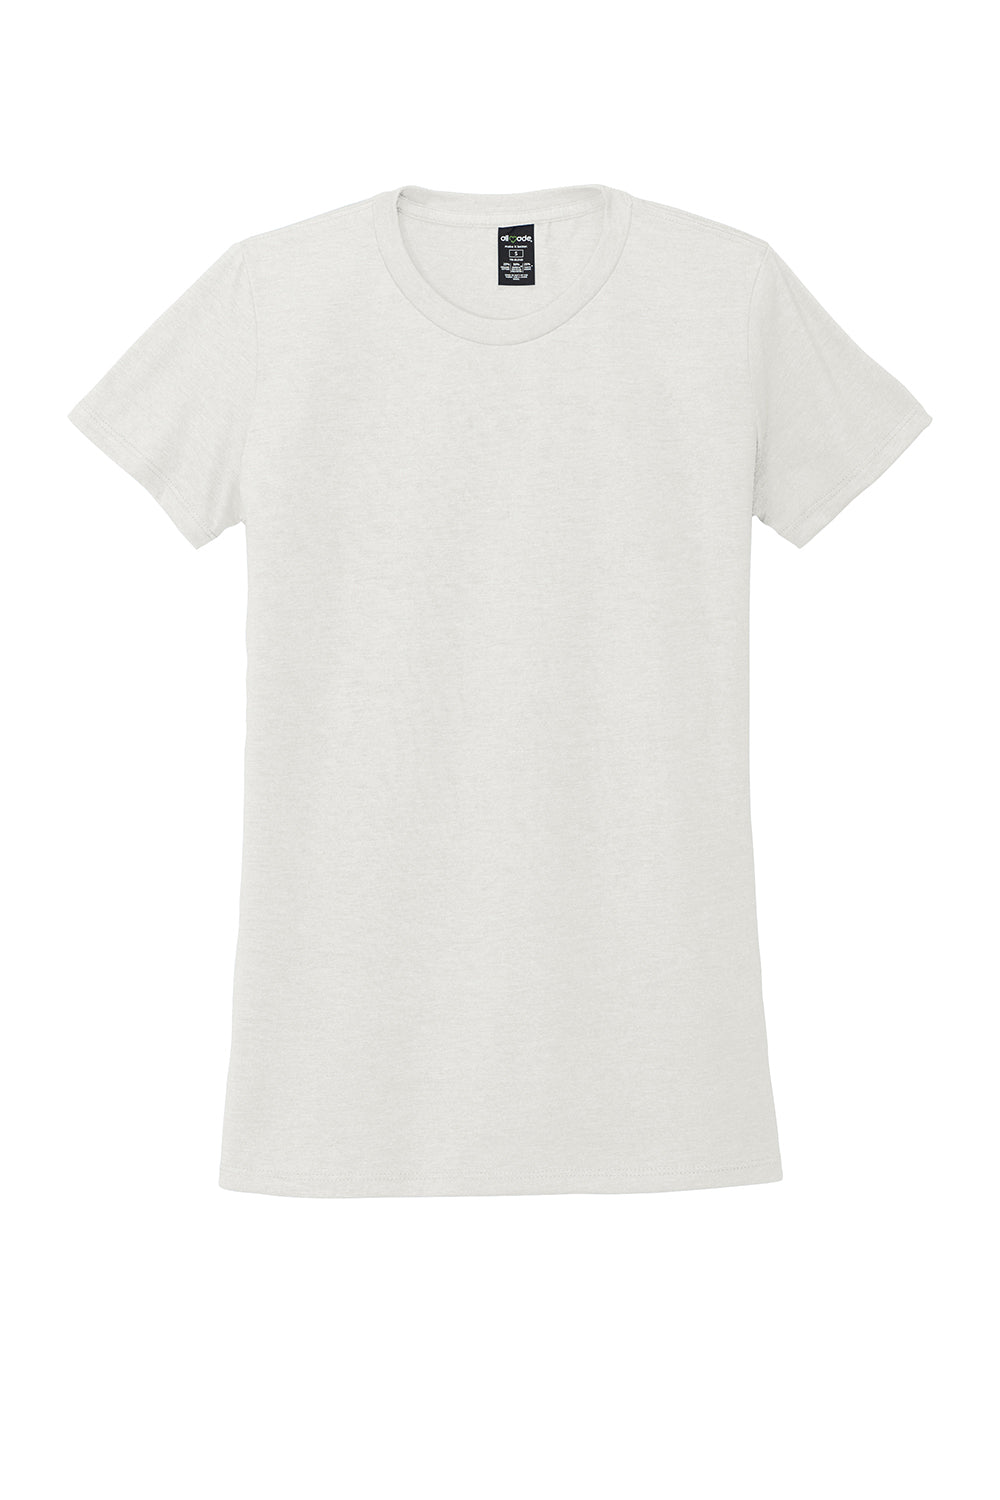 Allmade AL2008 Womens Short Sleeve Crewneck T-Shirt Fairly White Flat Front